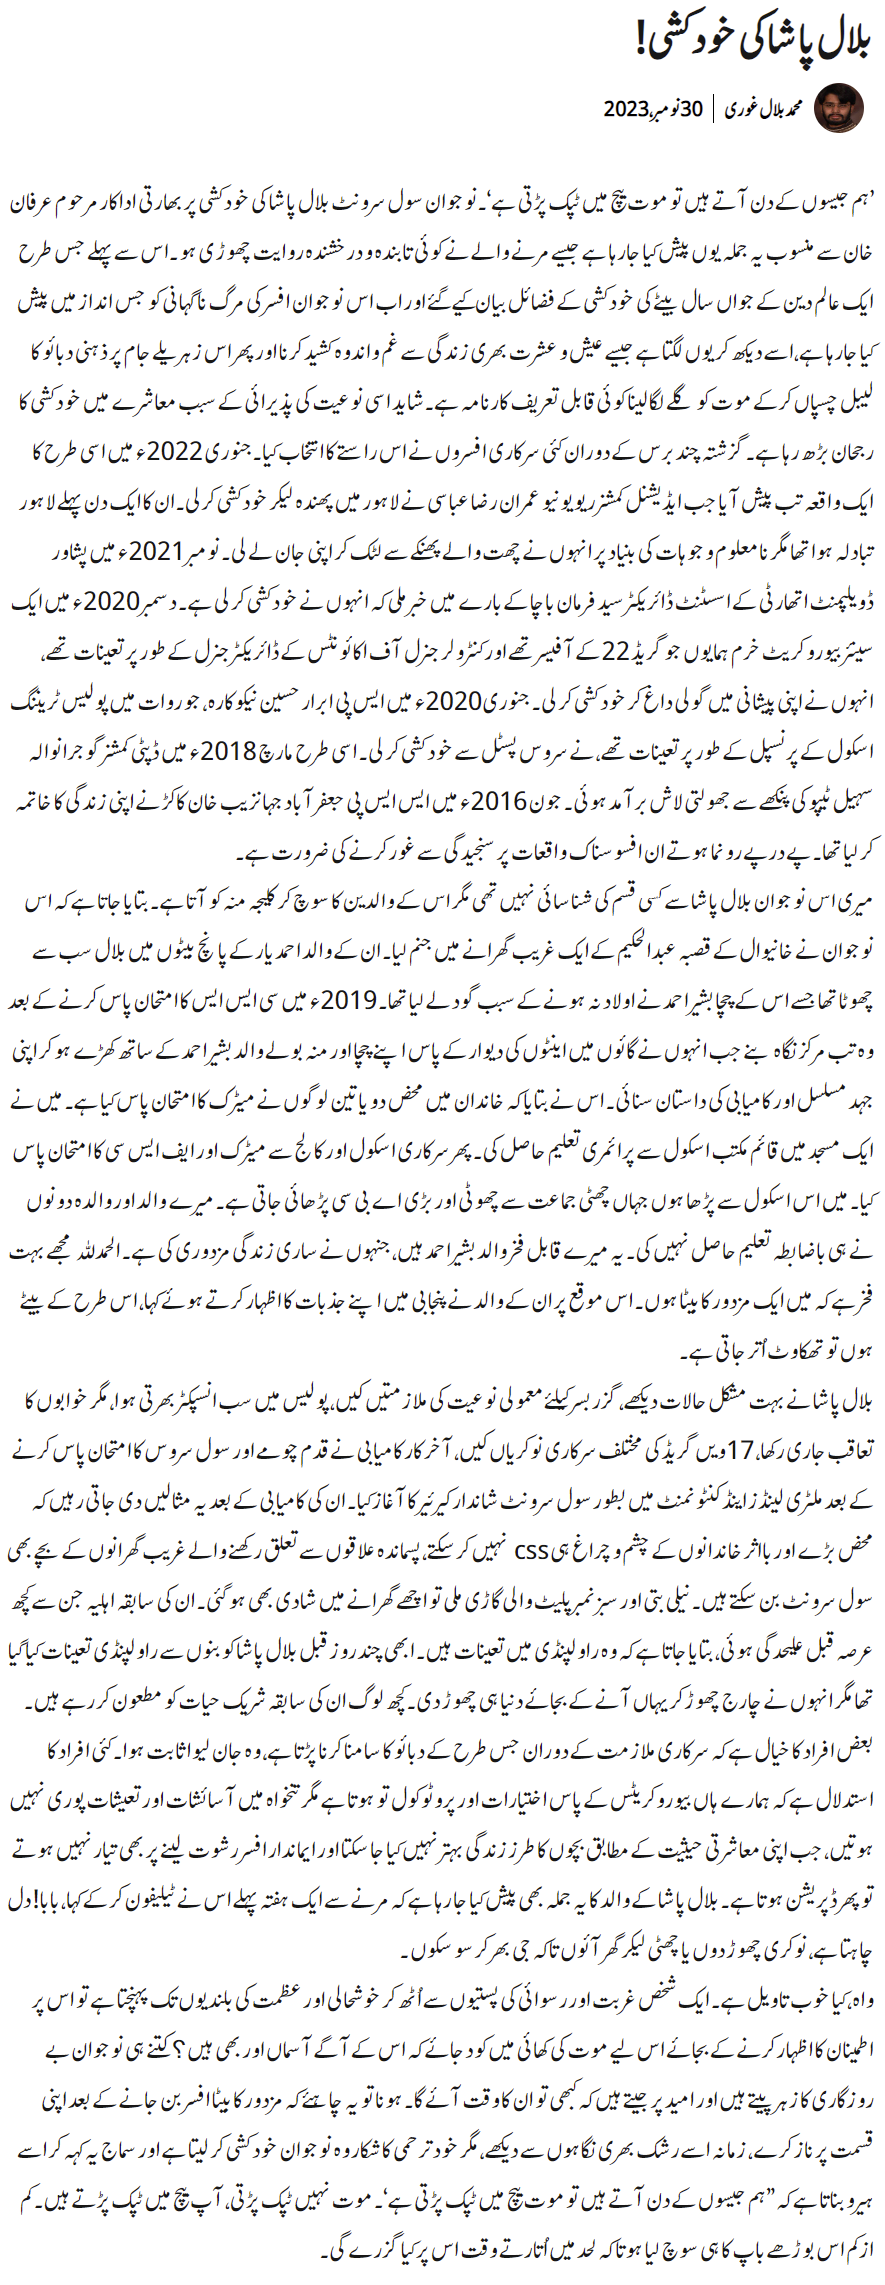 Muhammad Bilal Ghauri Urdu Column About CSS Civil Servant Bilal Pasha Suicide Reasons